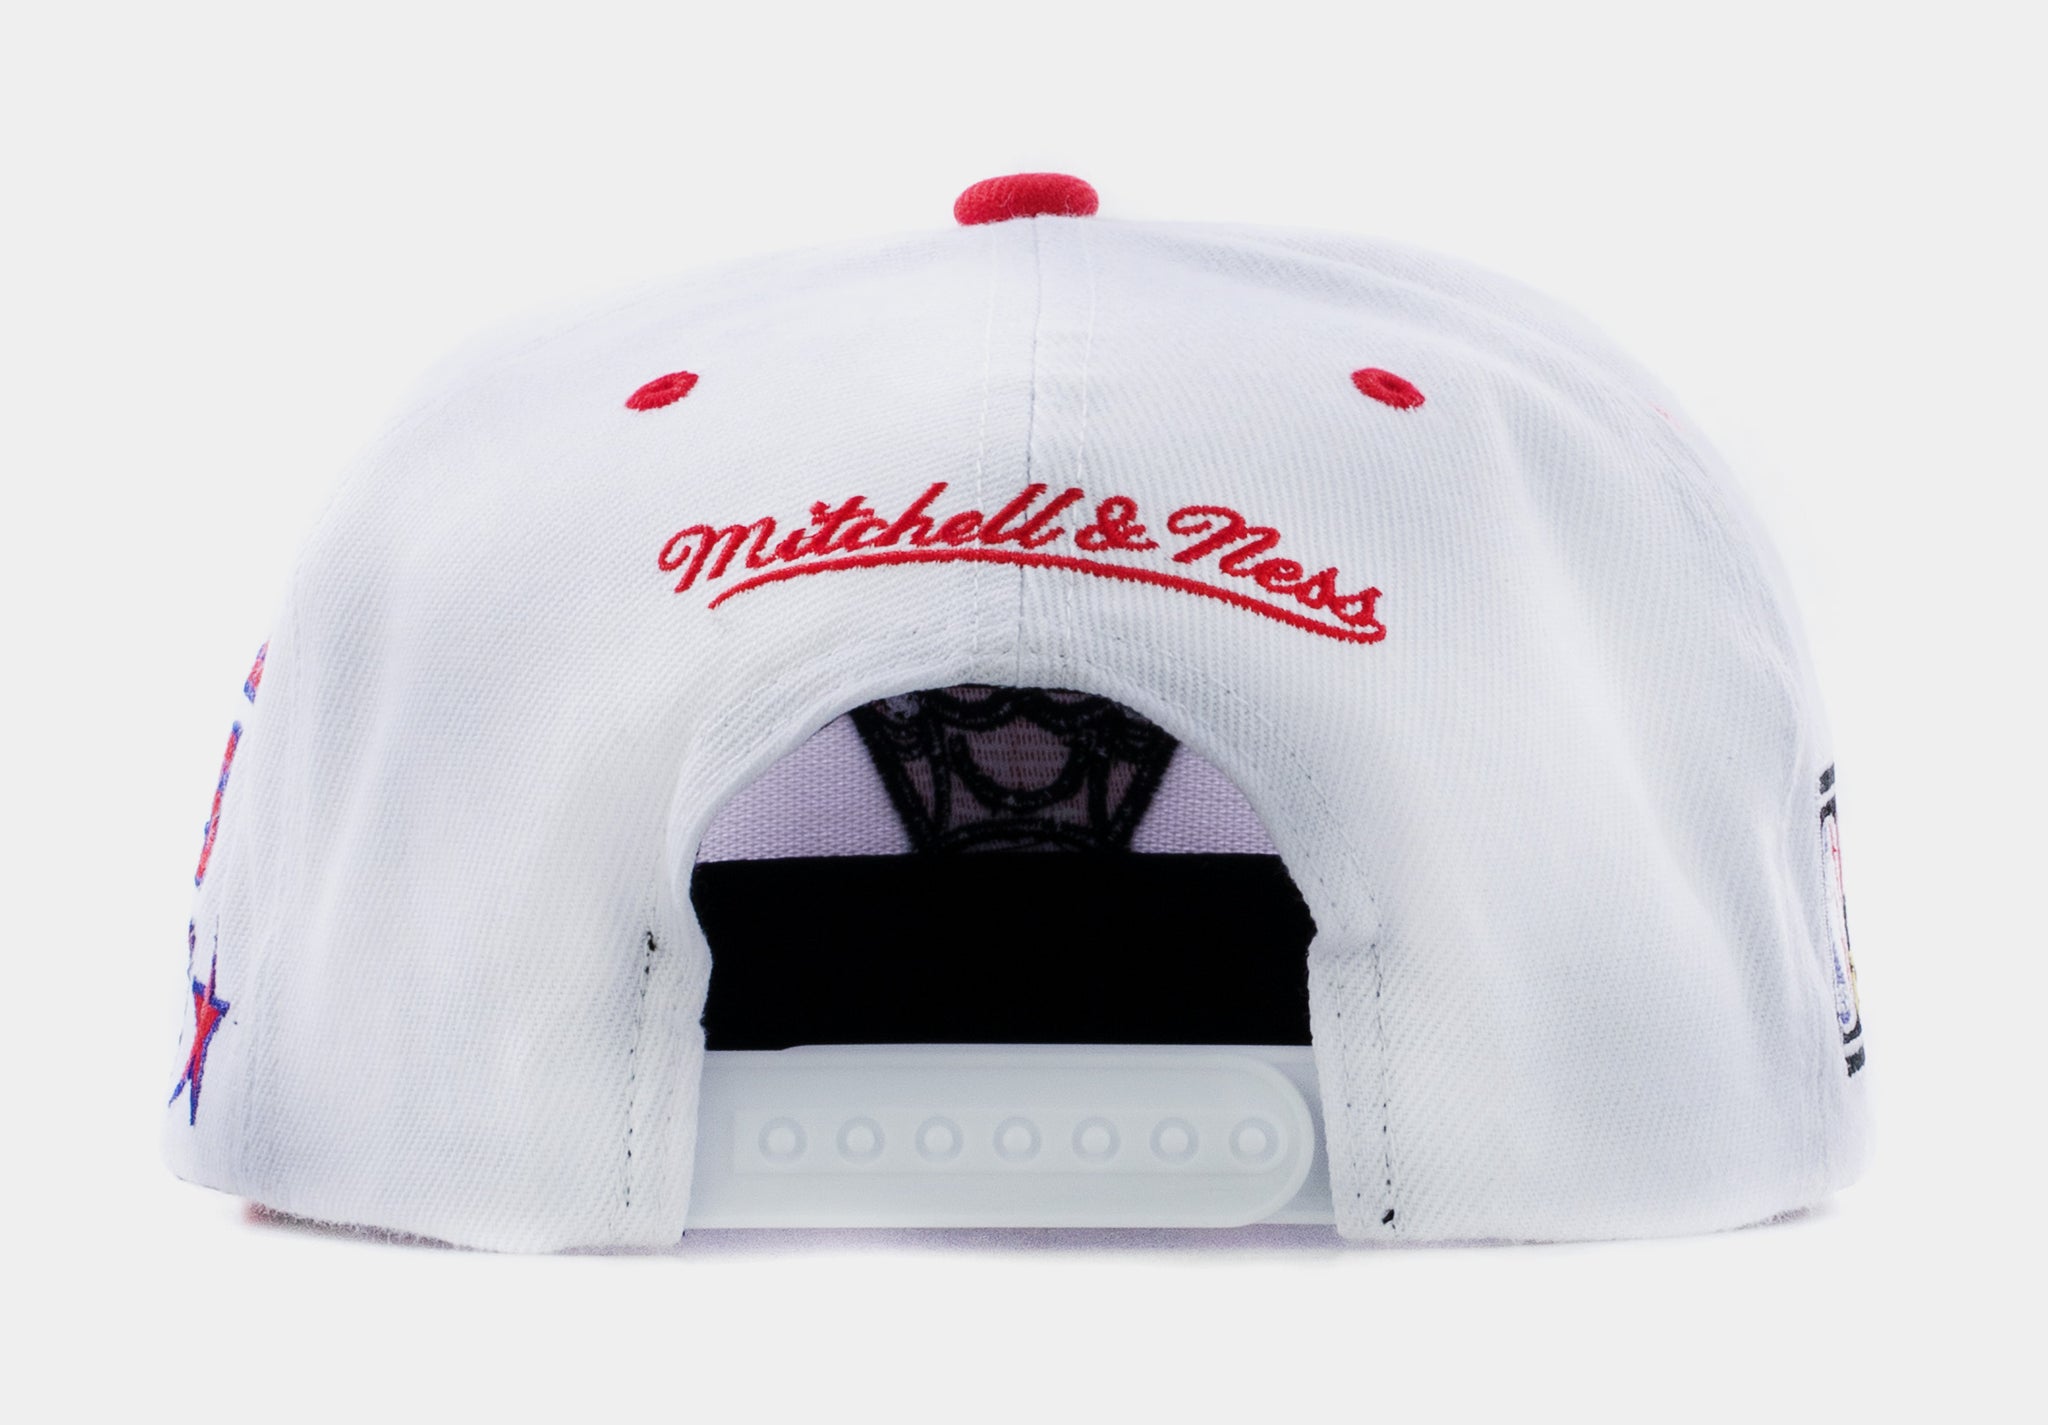 Men's Mitchell & Ness Red Chicago Bulls English Dropback Snapback Hat